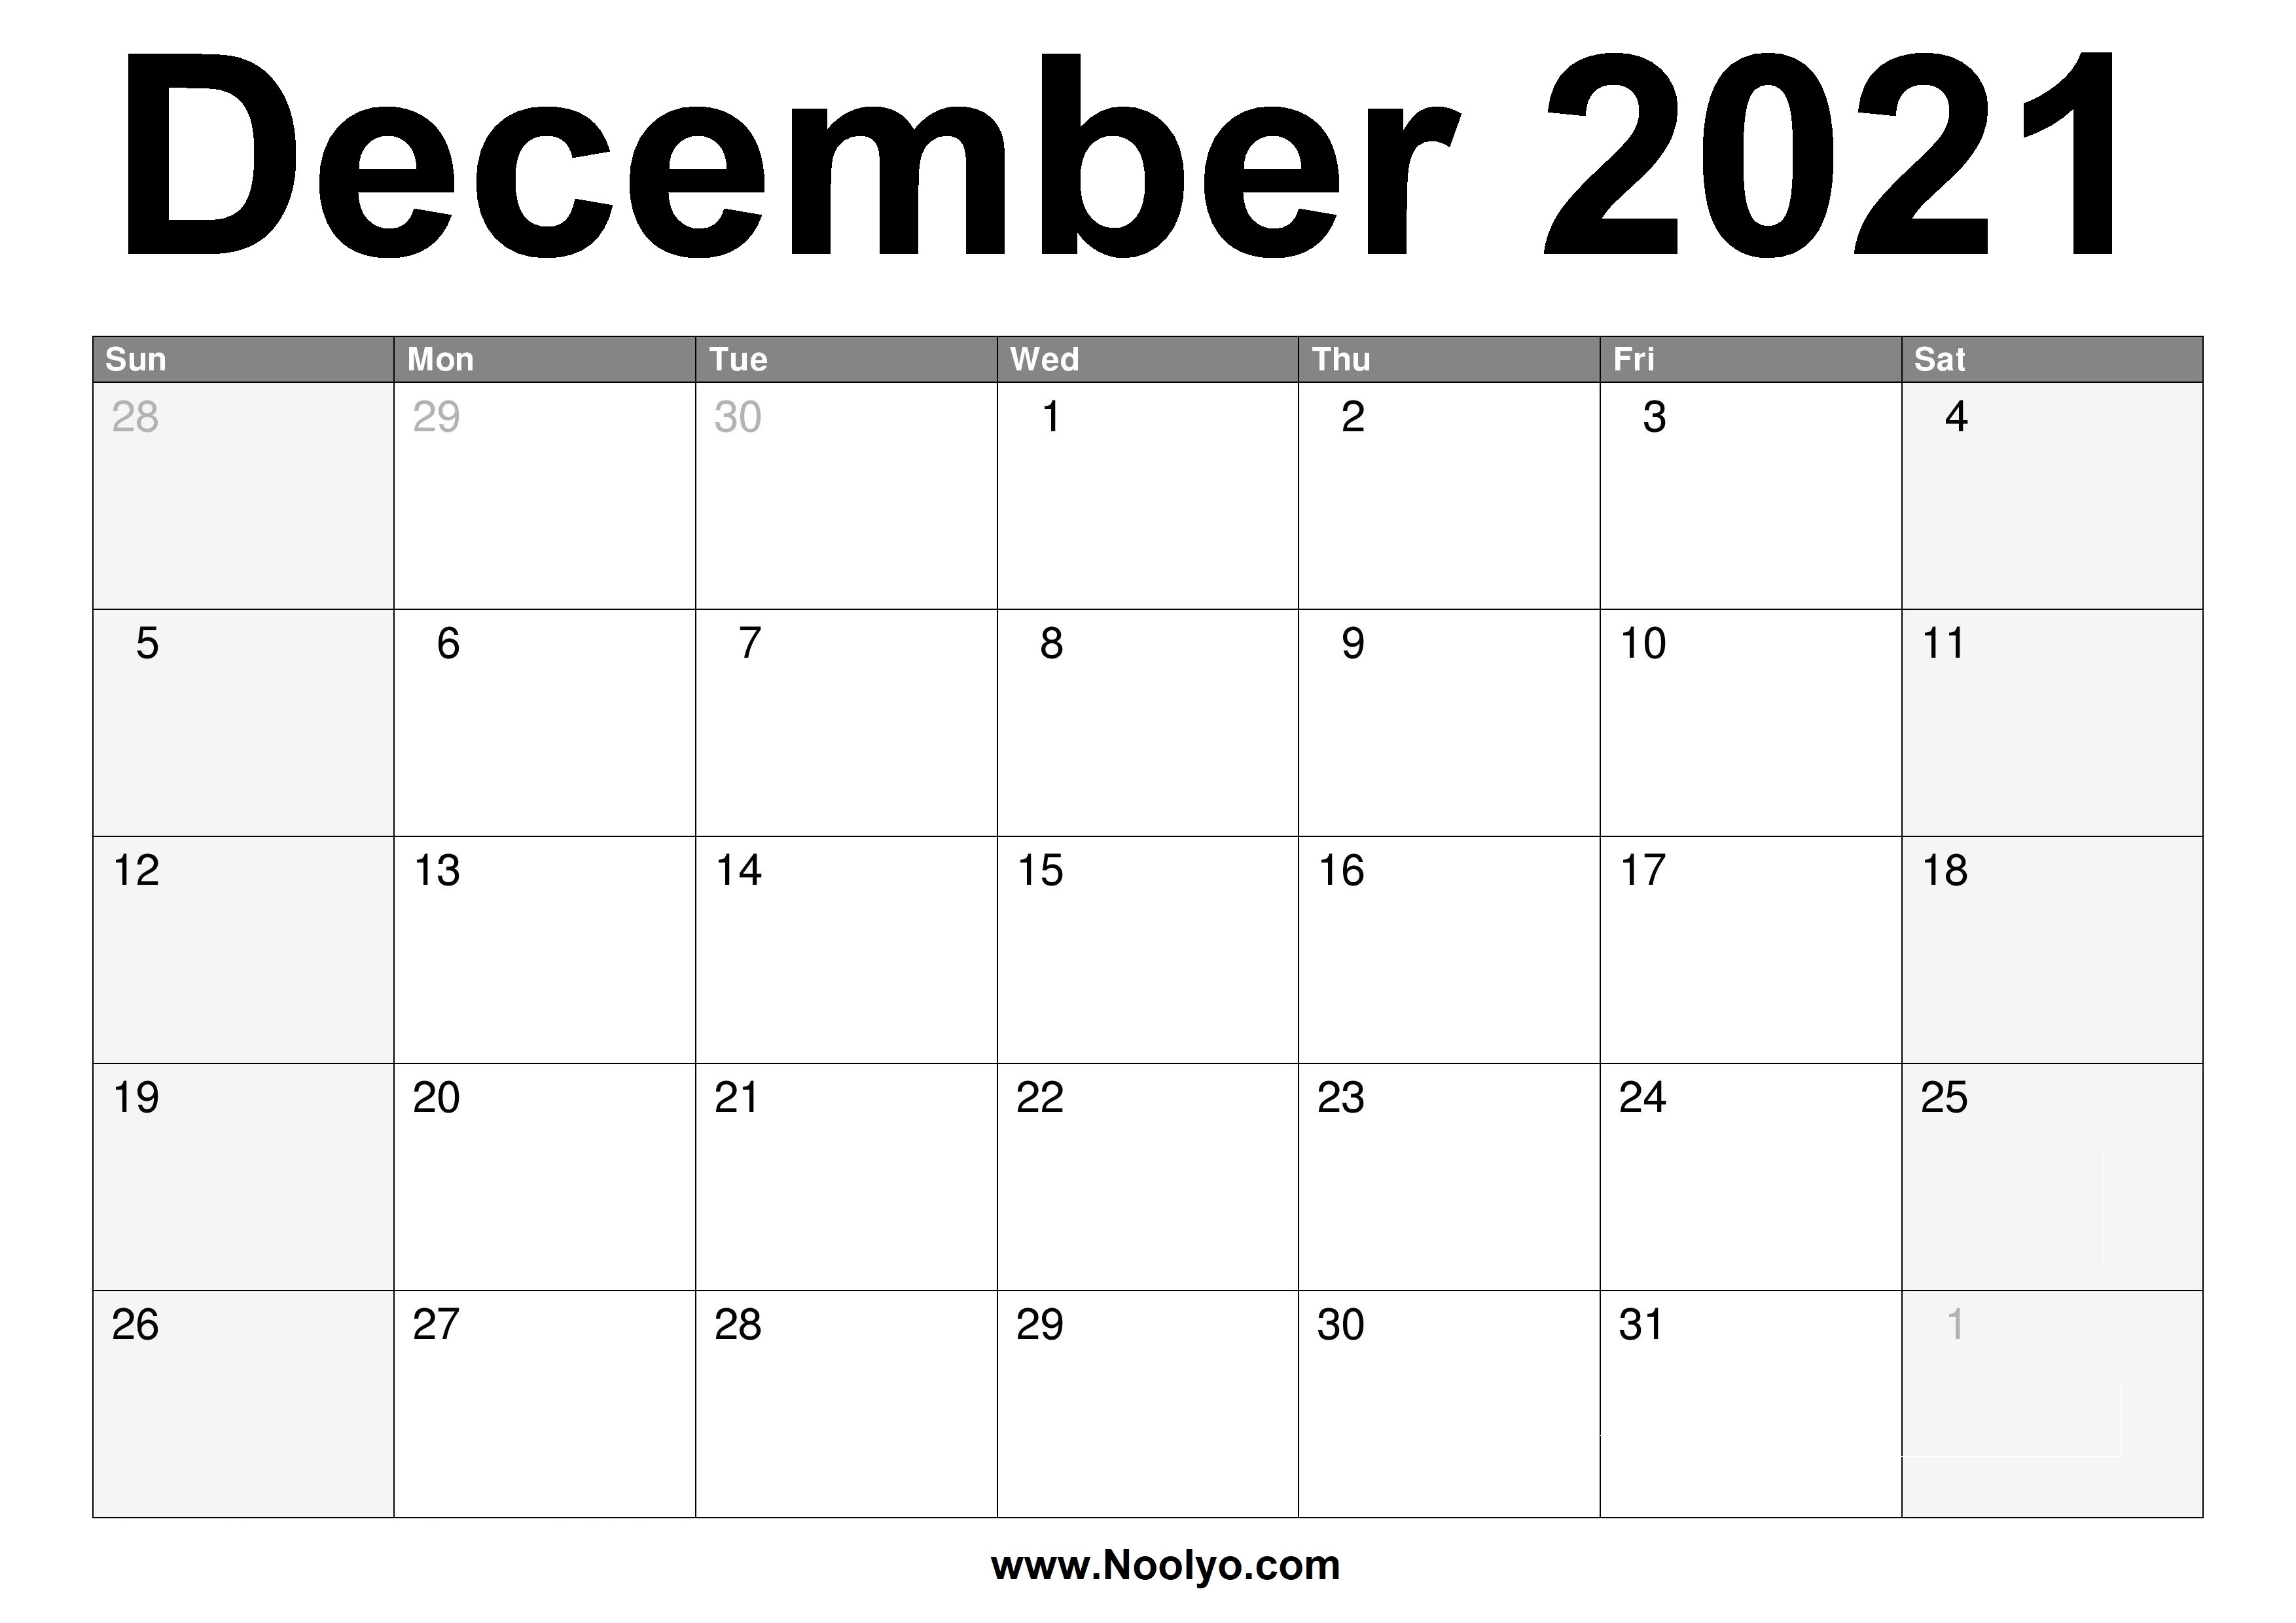 December 2021 Calendar Printable - Free Download - Noolyo December 2021 Calendar Xl